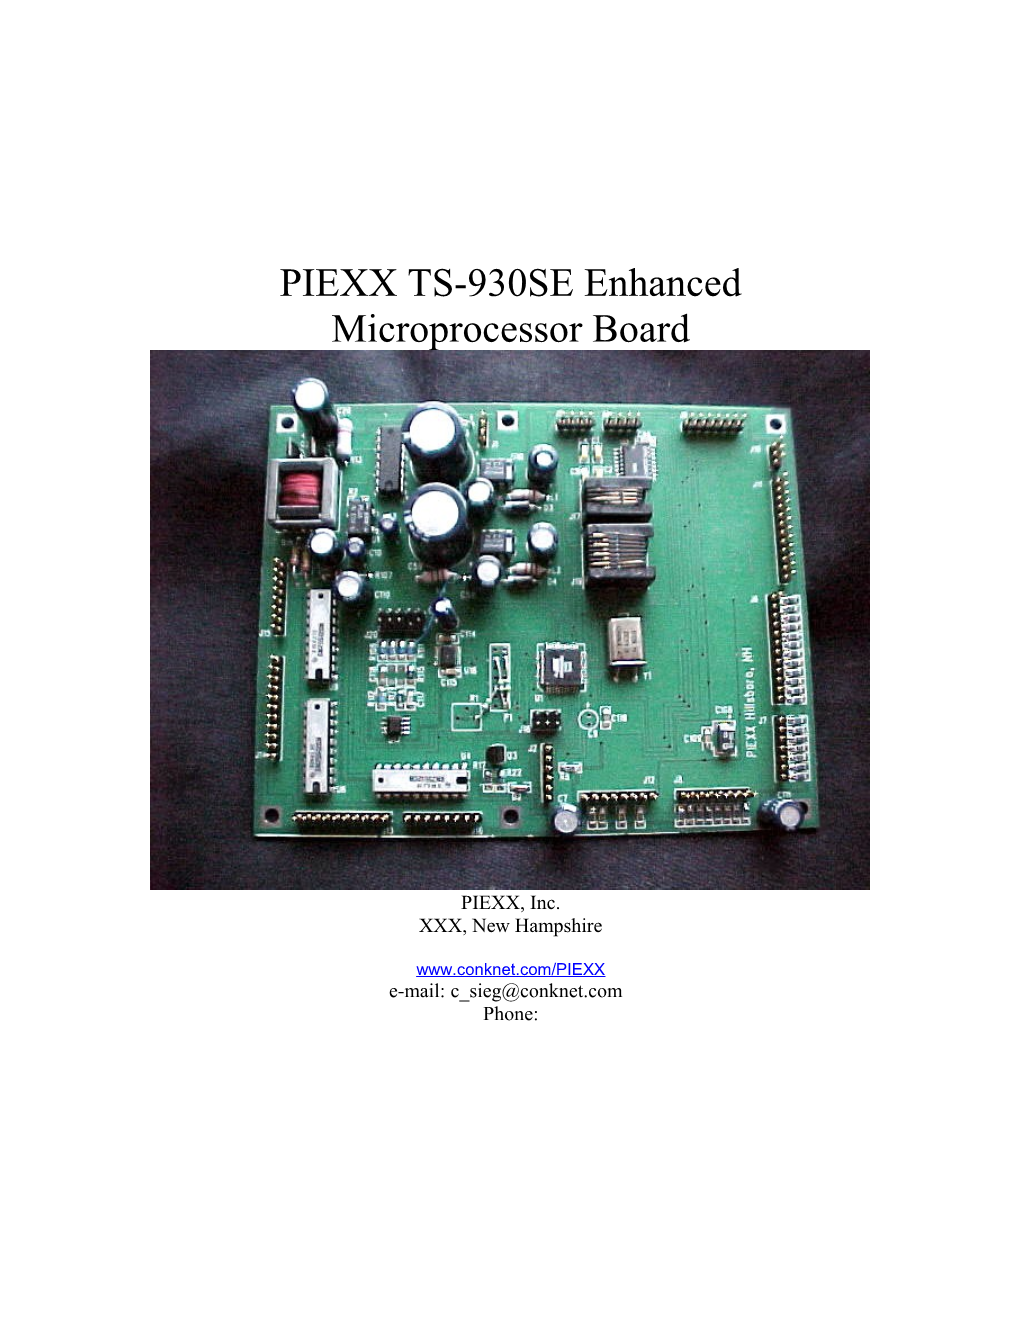 PIEXX TS-930 Microprocessor Board